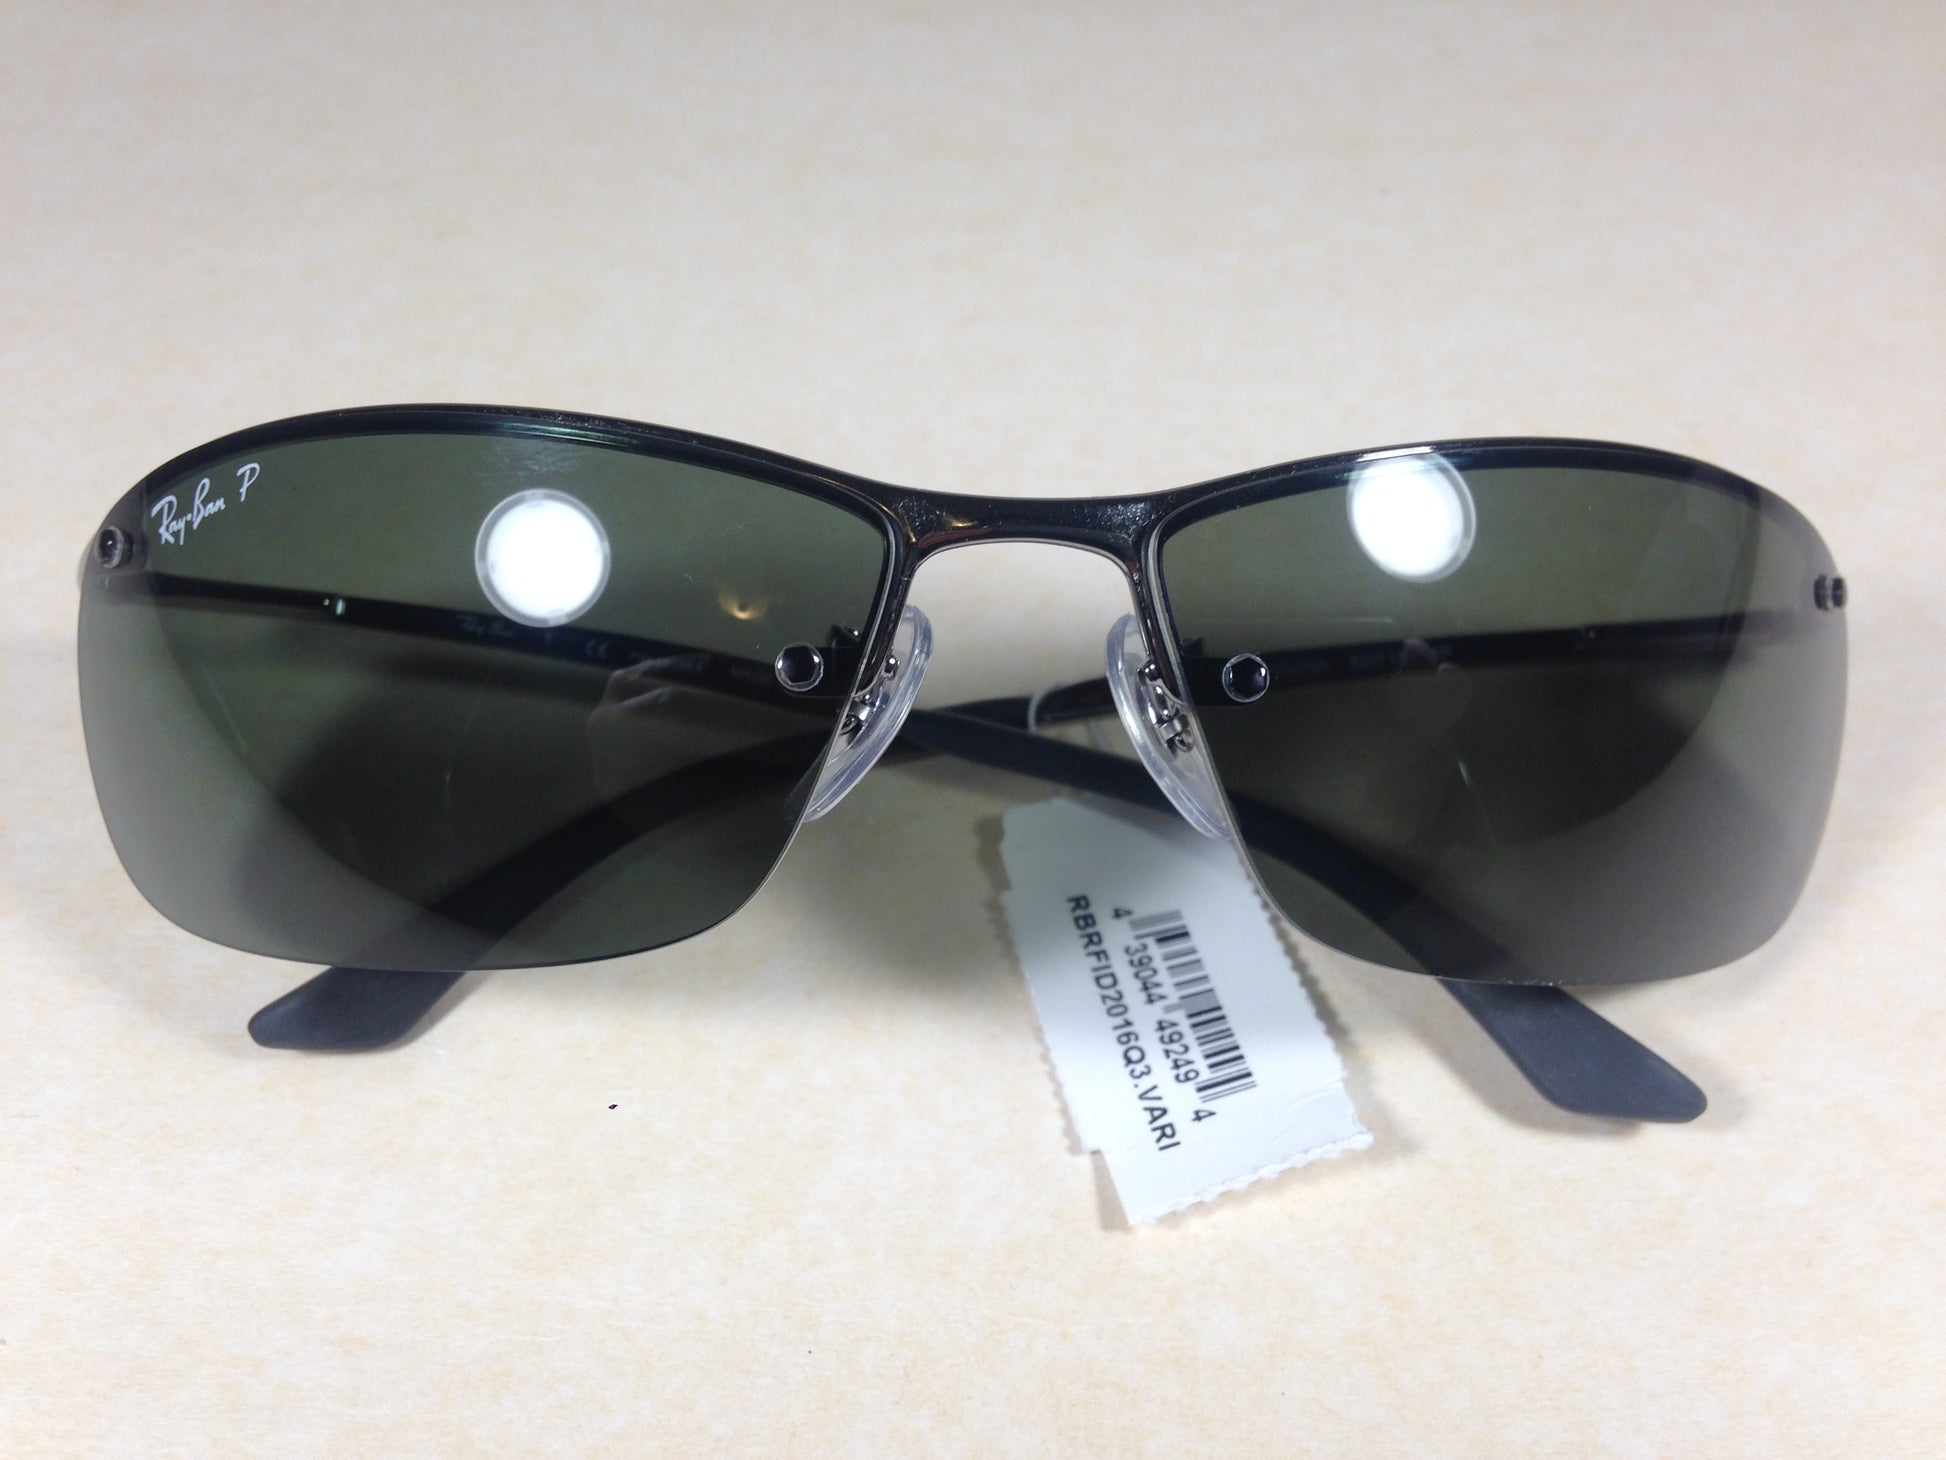  Ray Ban RB3183 Sunglasses,63mm,Gunmetal/Green